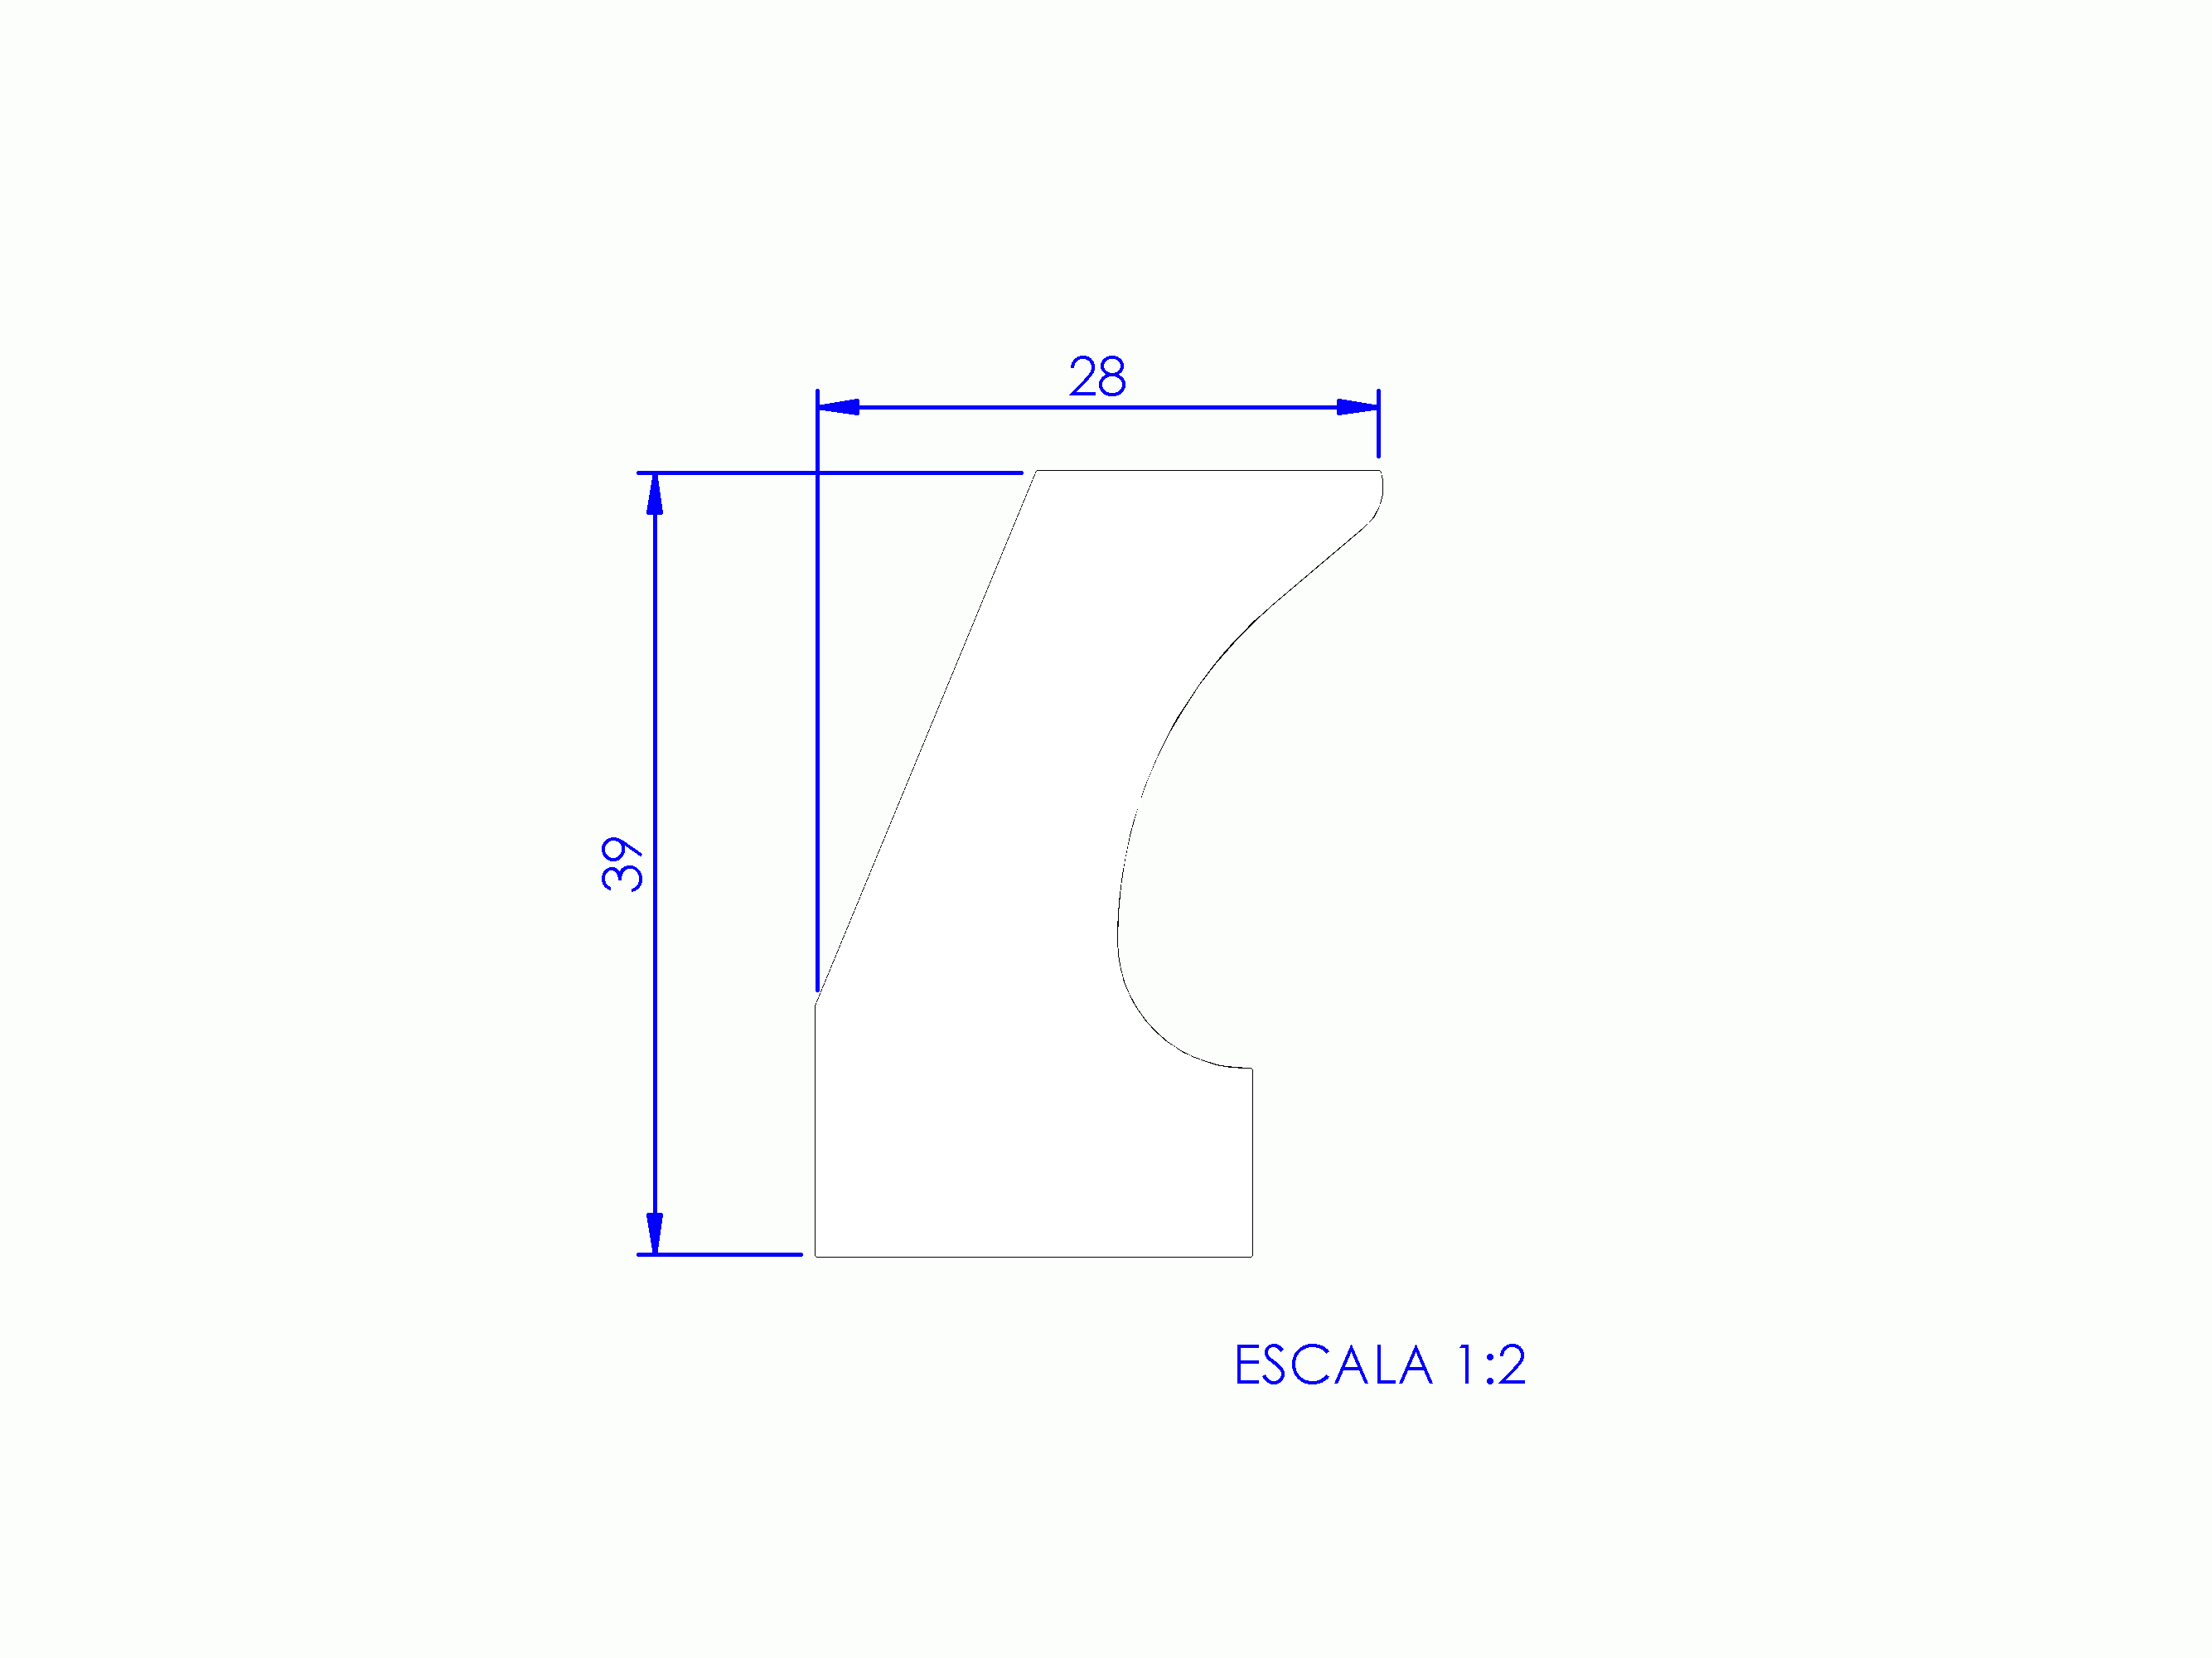 Perfil de Silicona P18A - formato tipo Labiado - forma irregular